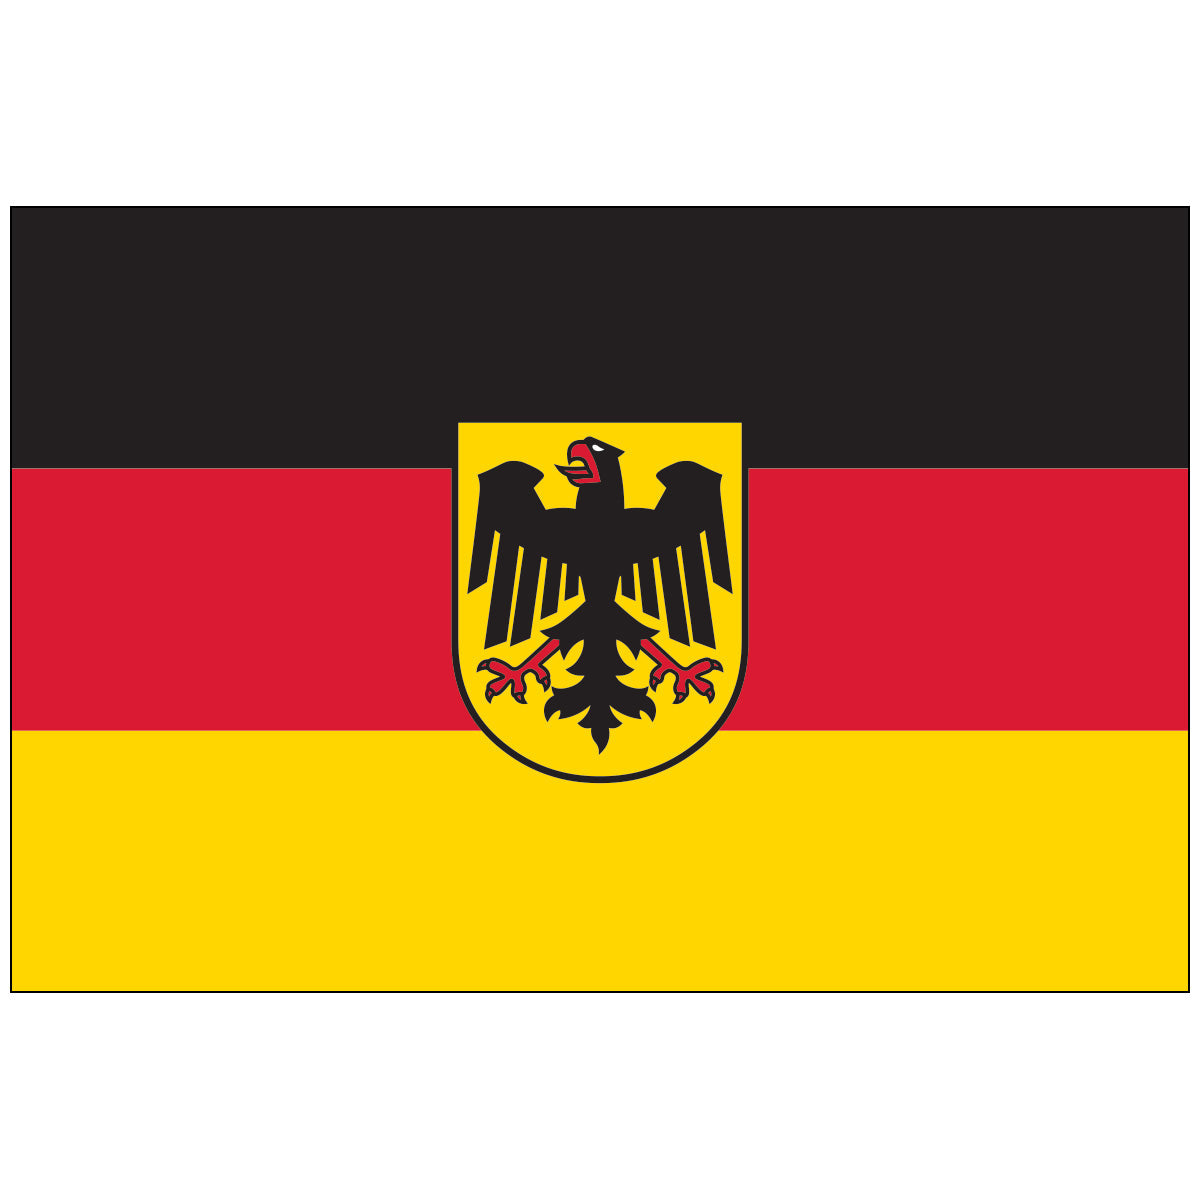 Germany - World Flag